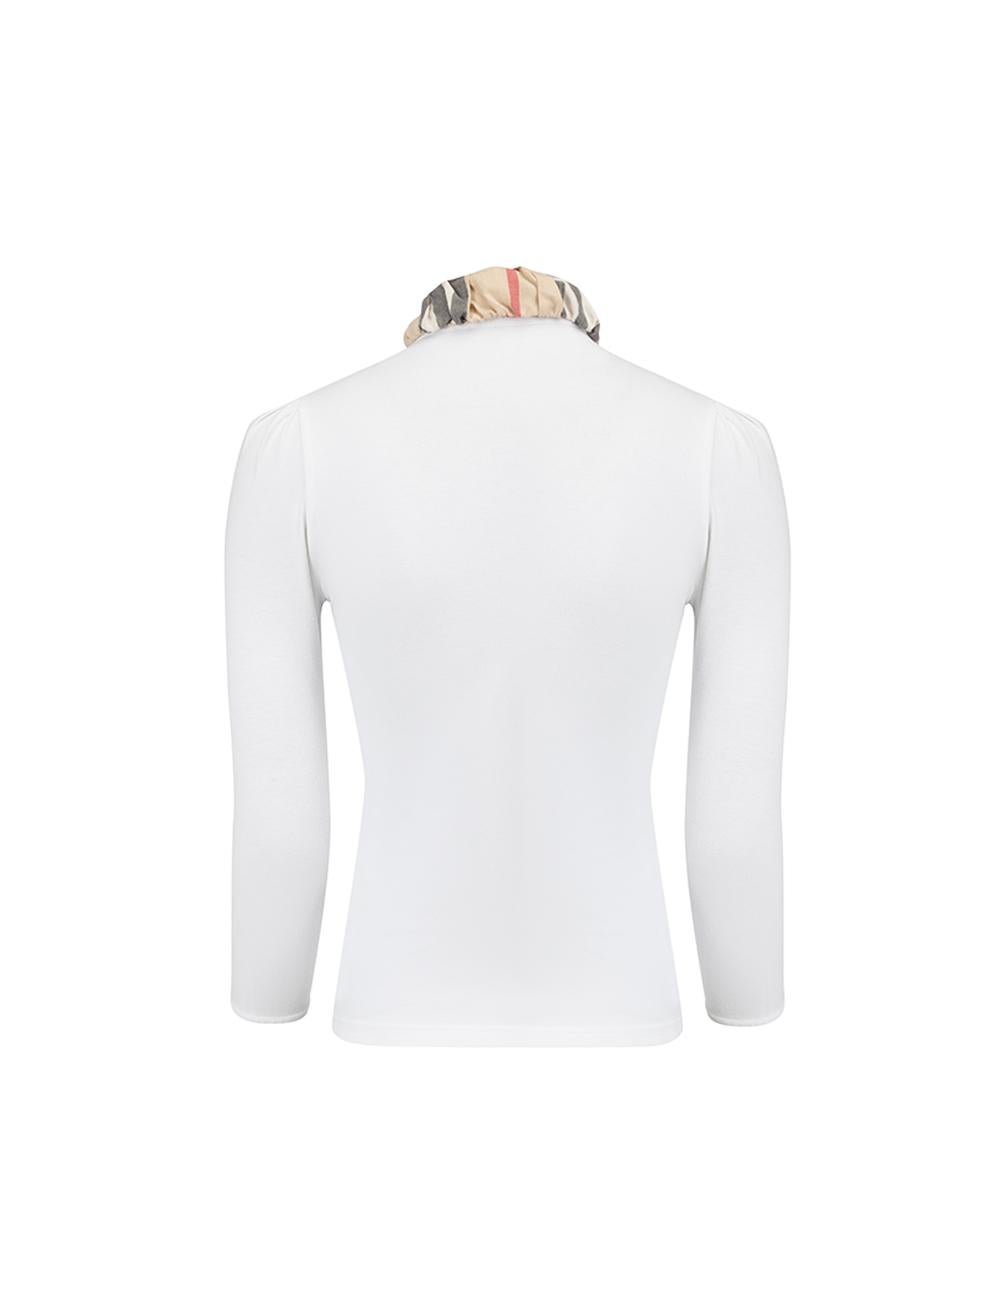 Gray Burberry Burberry Brit White Cotton Nova Check Collar Sweatshirt Size XS